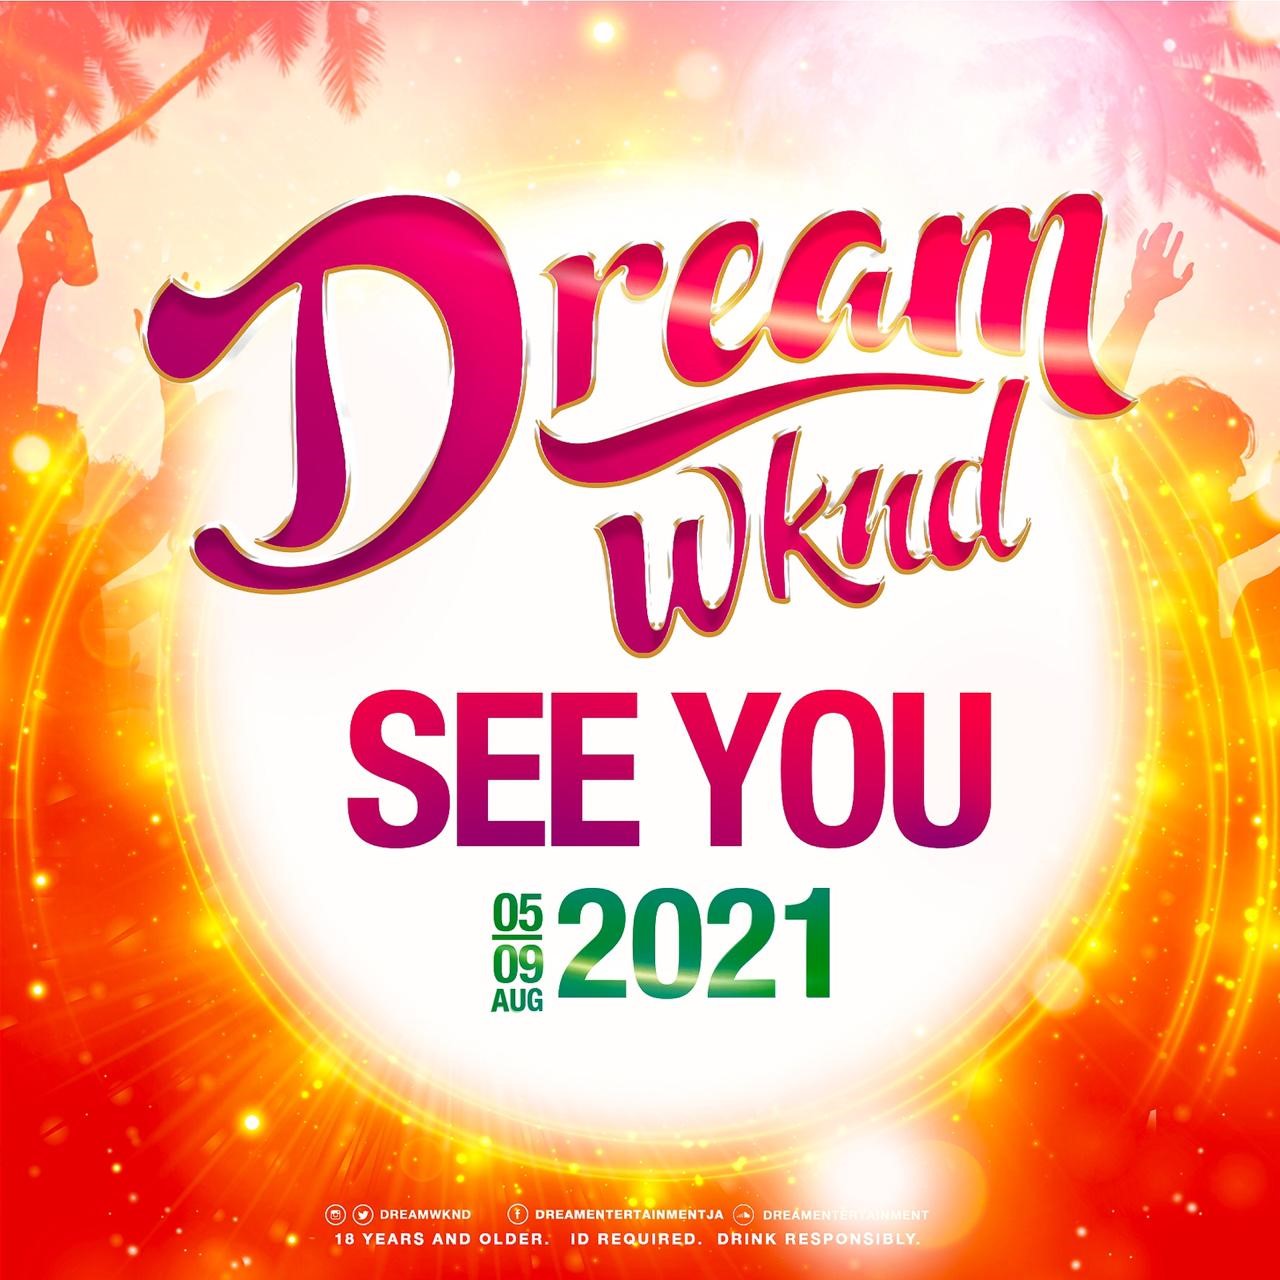 DREAM WEEKEND 2021 Tickets, Thu, Aug 5, 2021 at 3:00 PM | Eventbrite